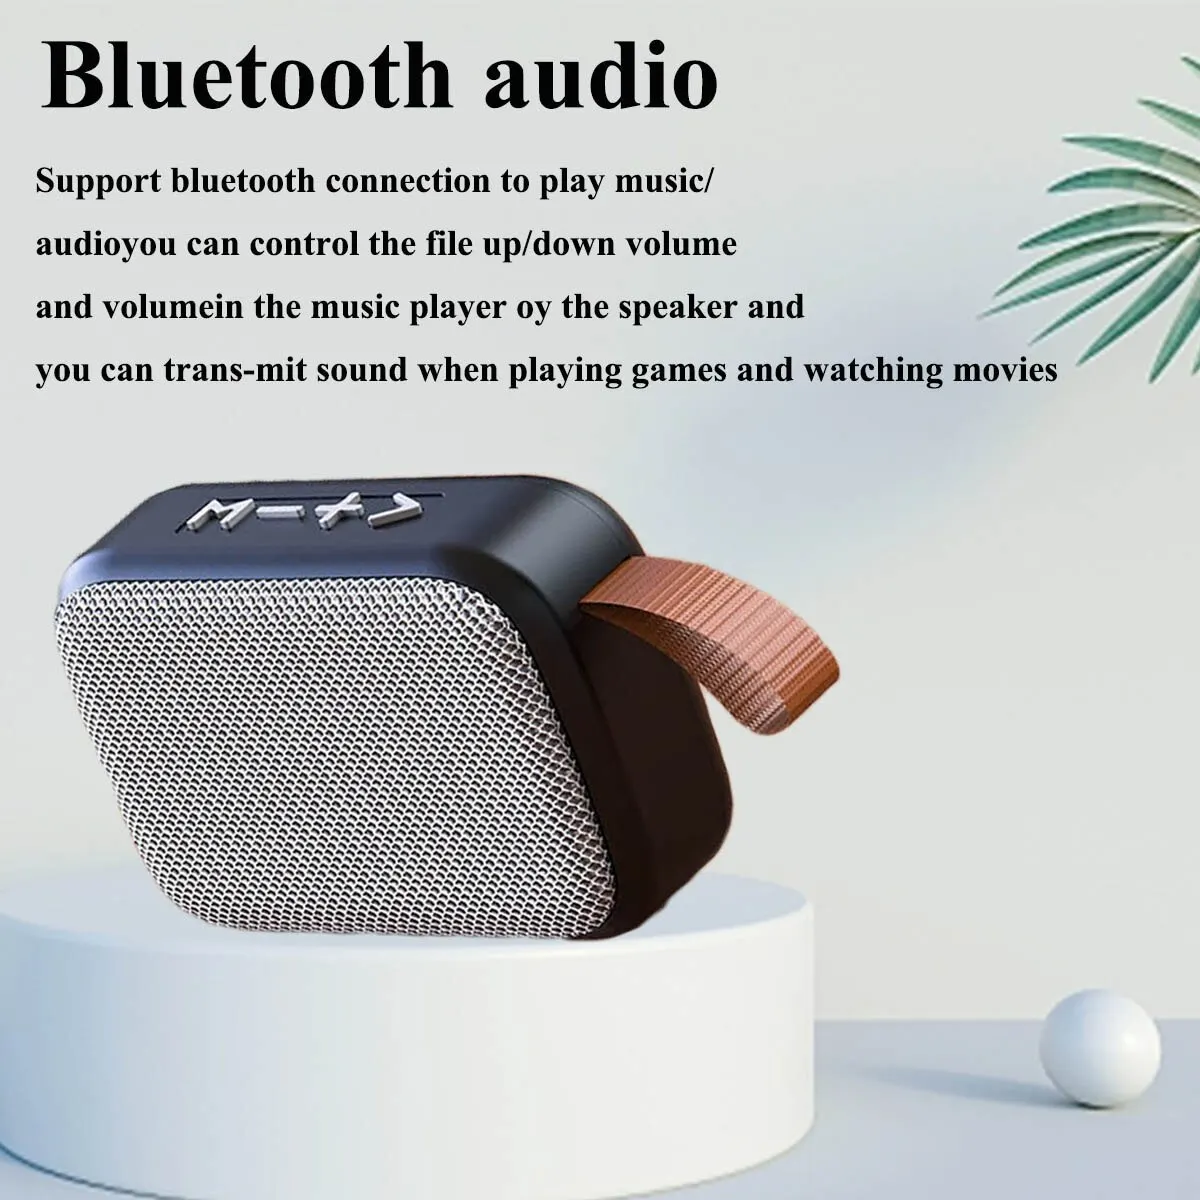 Universal - Haut-parleur Bluetooth Portable High Power Stéréo